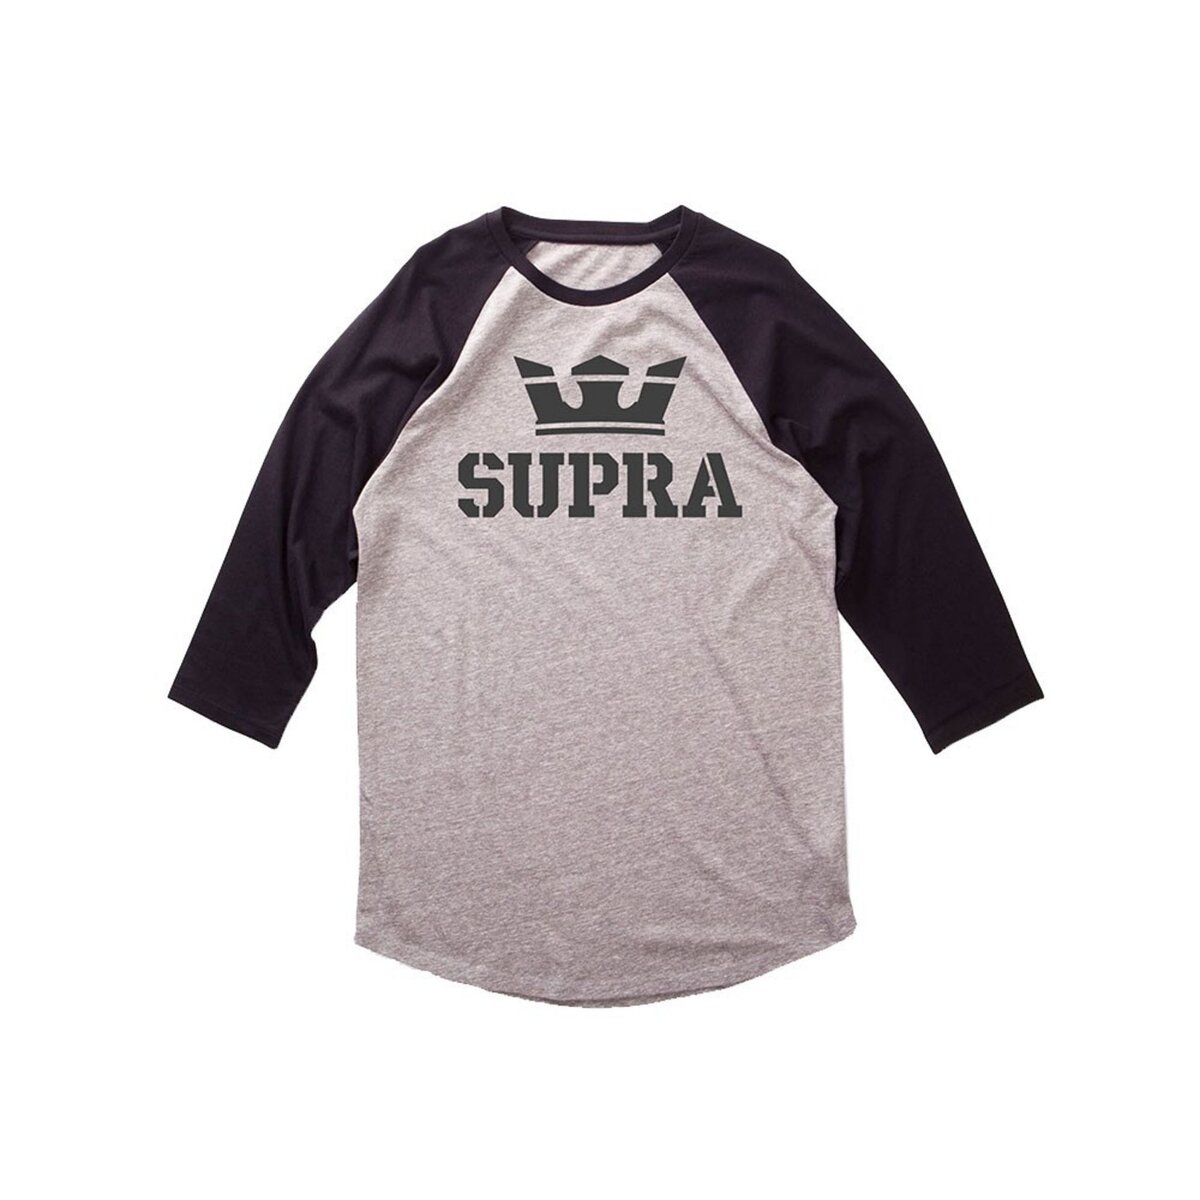  T-shirt homme manche 3/4 Supra Above gris